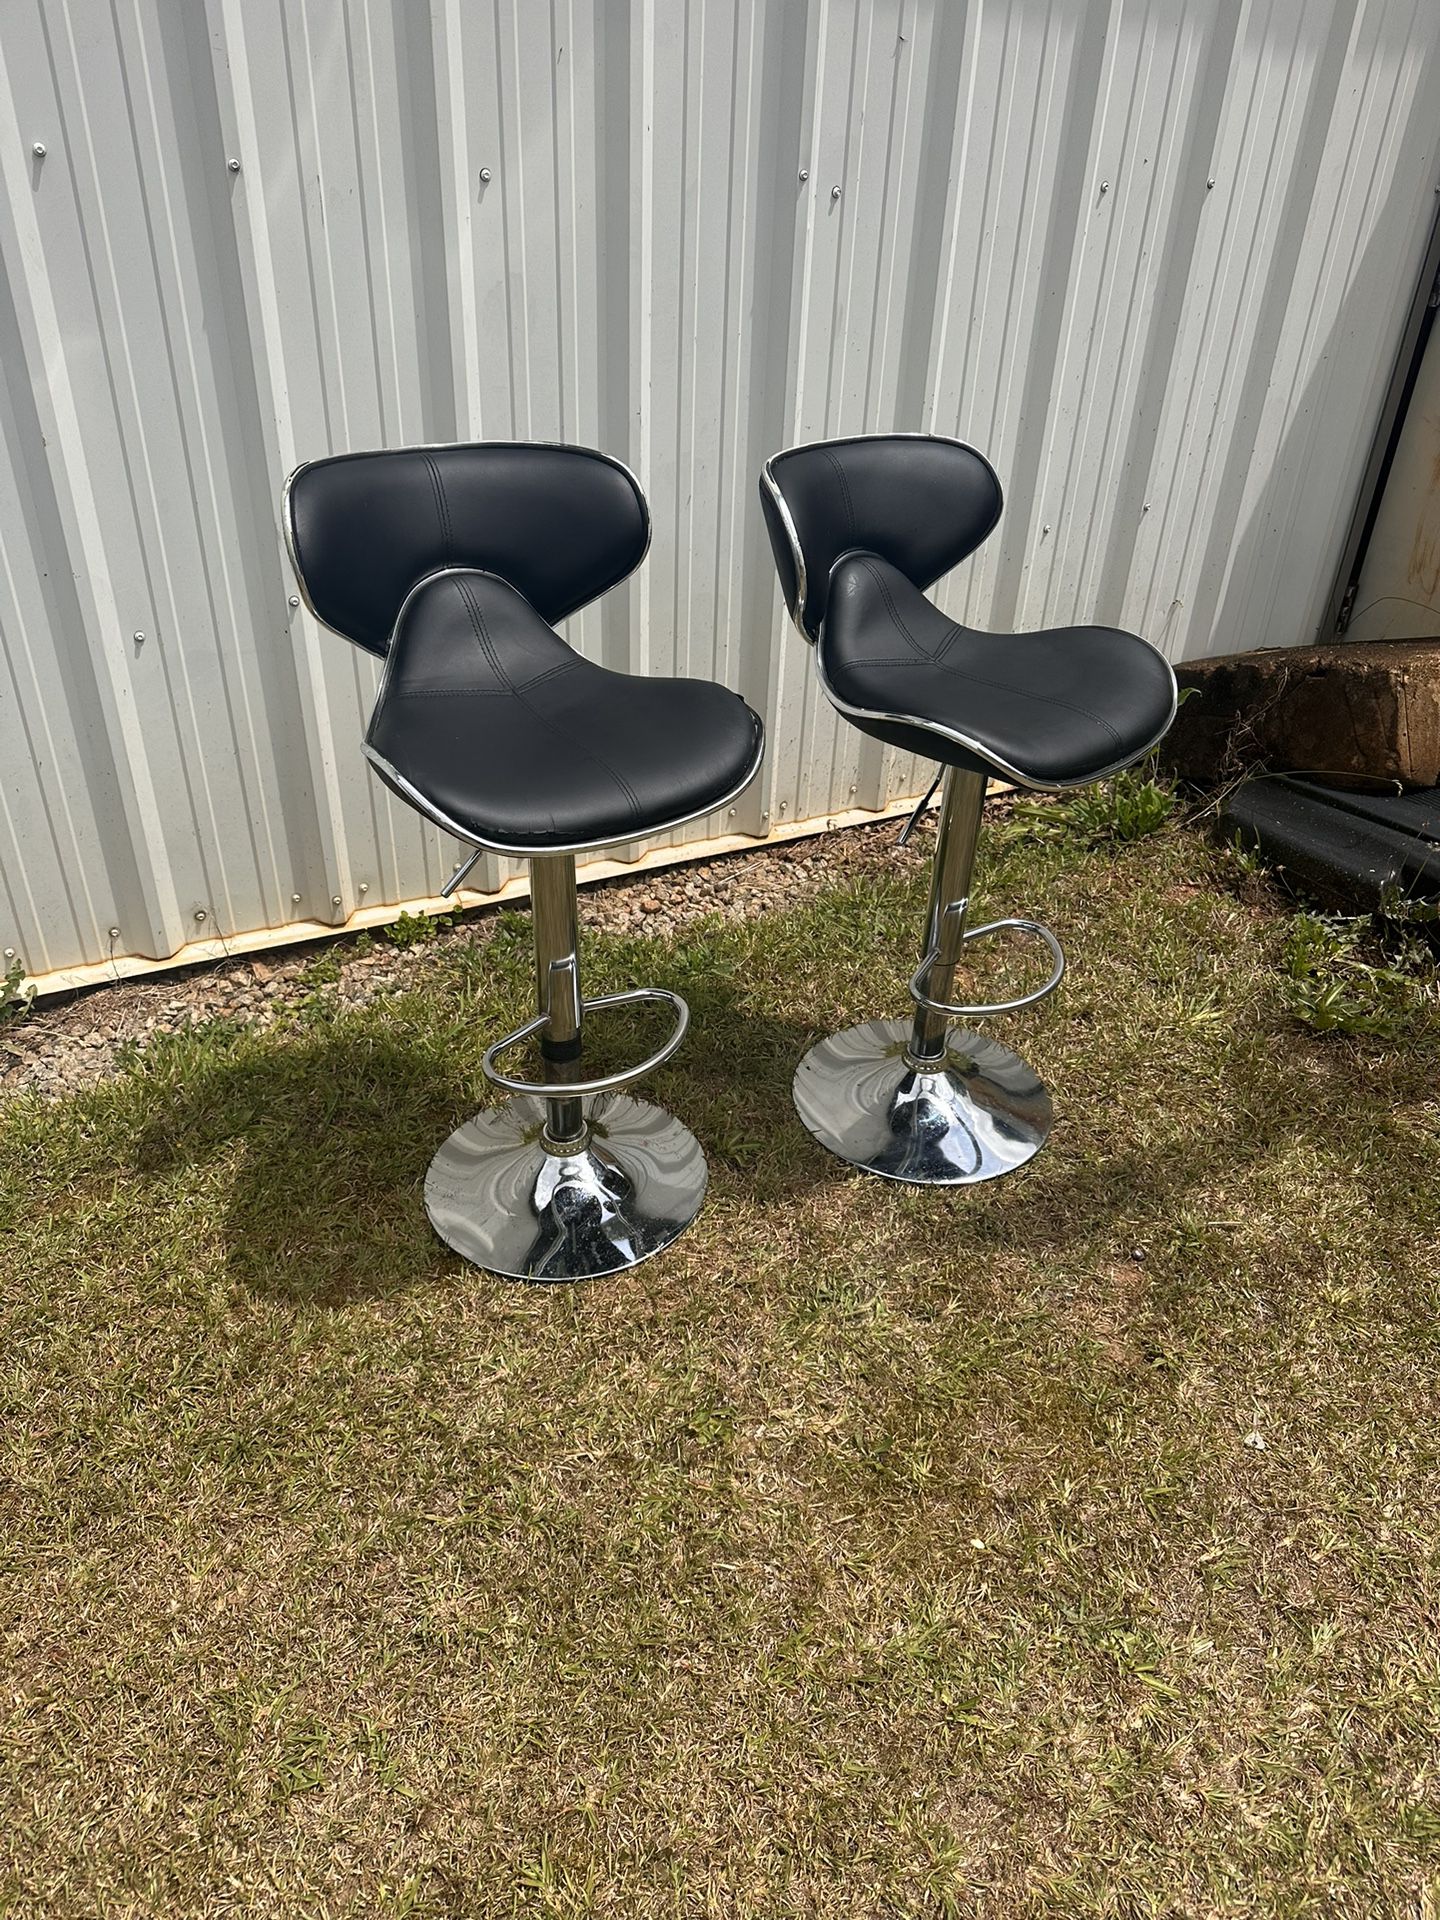 2 adjustable height bar stools